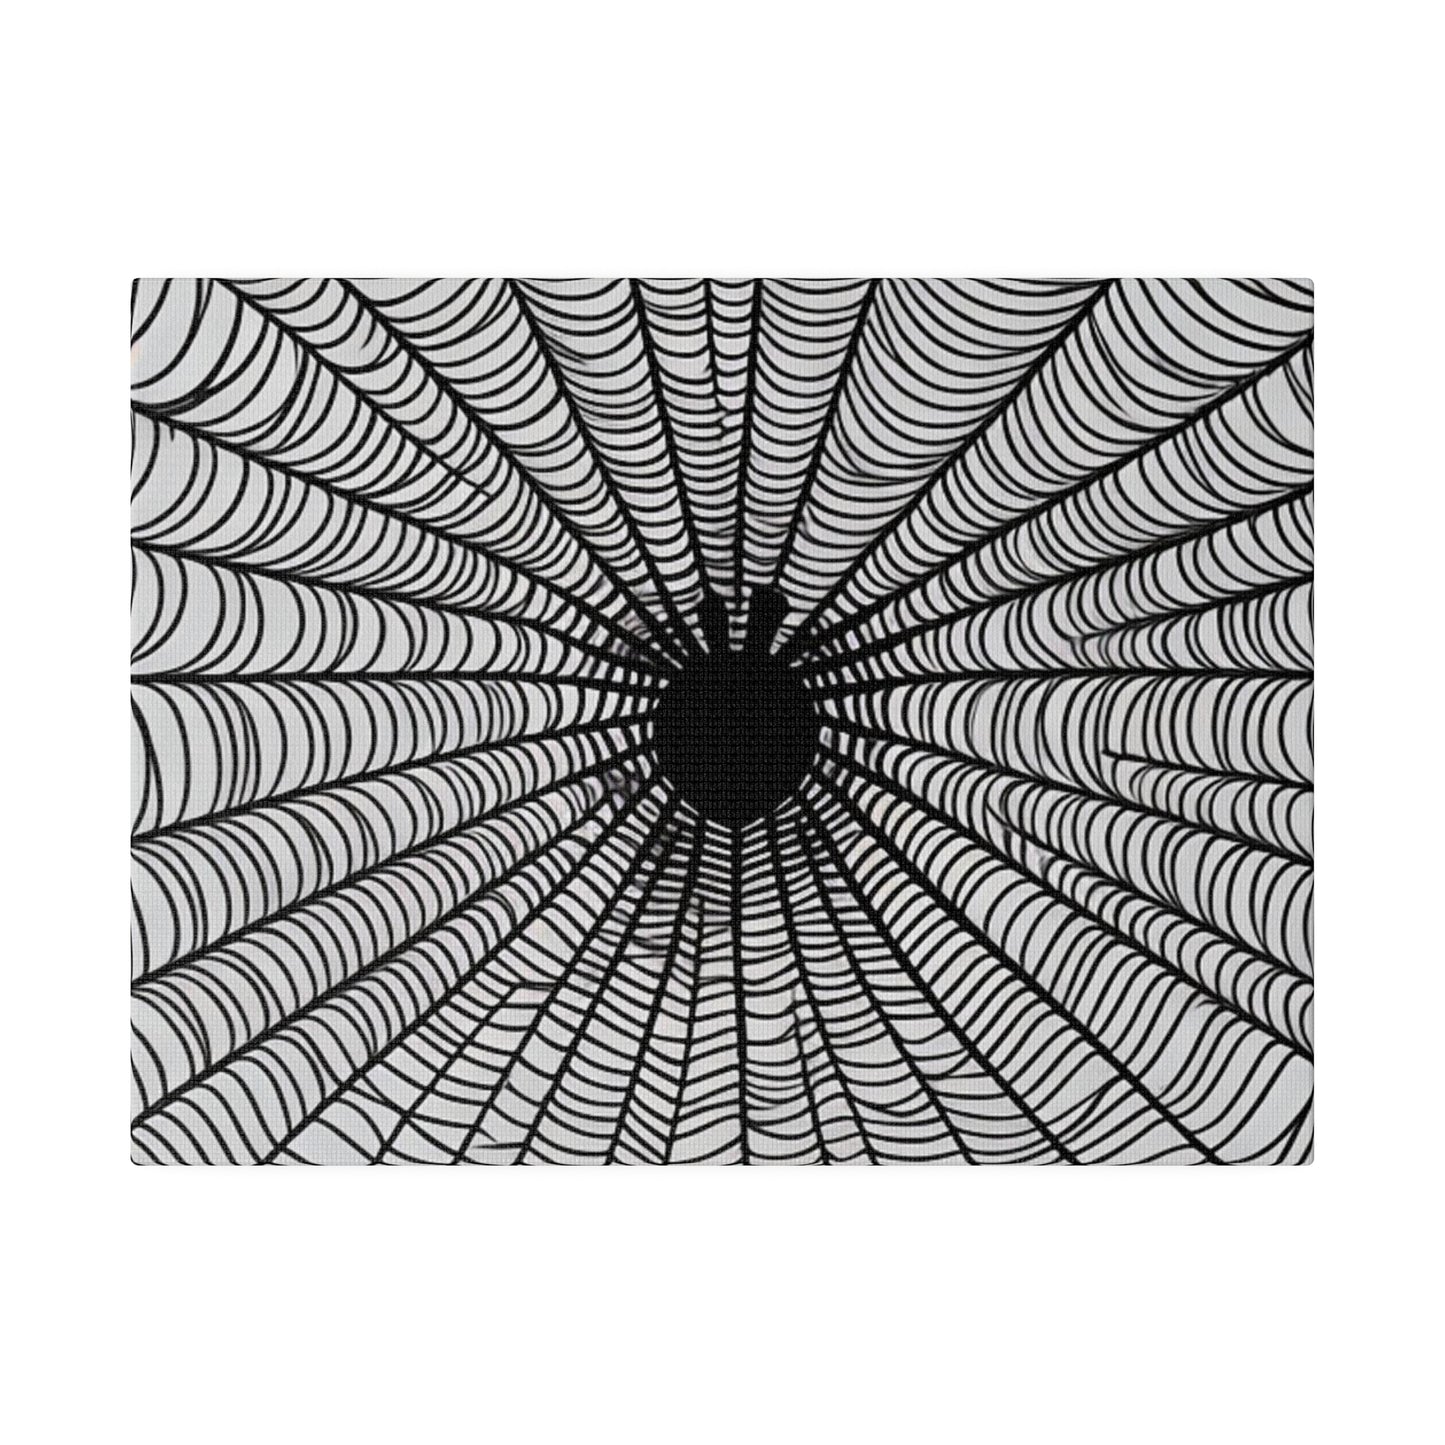 Black and White Spiderweb - Matte Canvas, Stretched, 0.75"